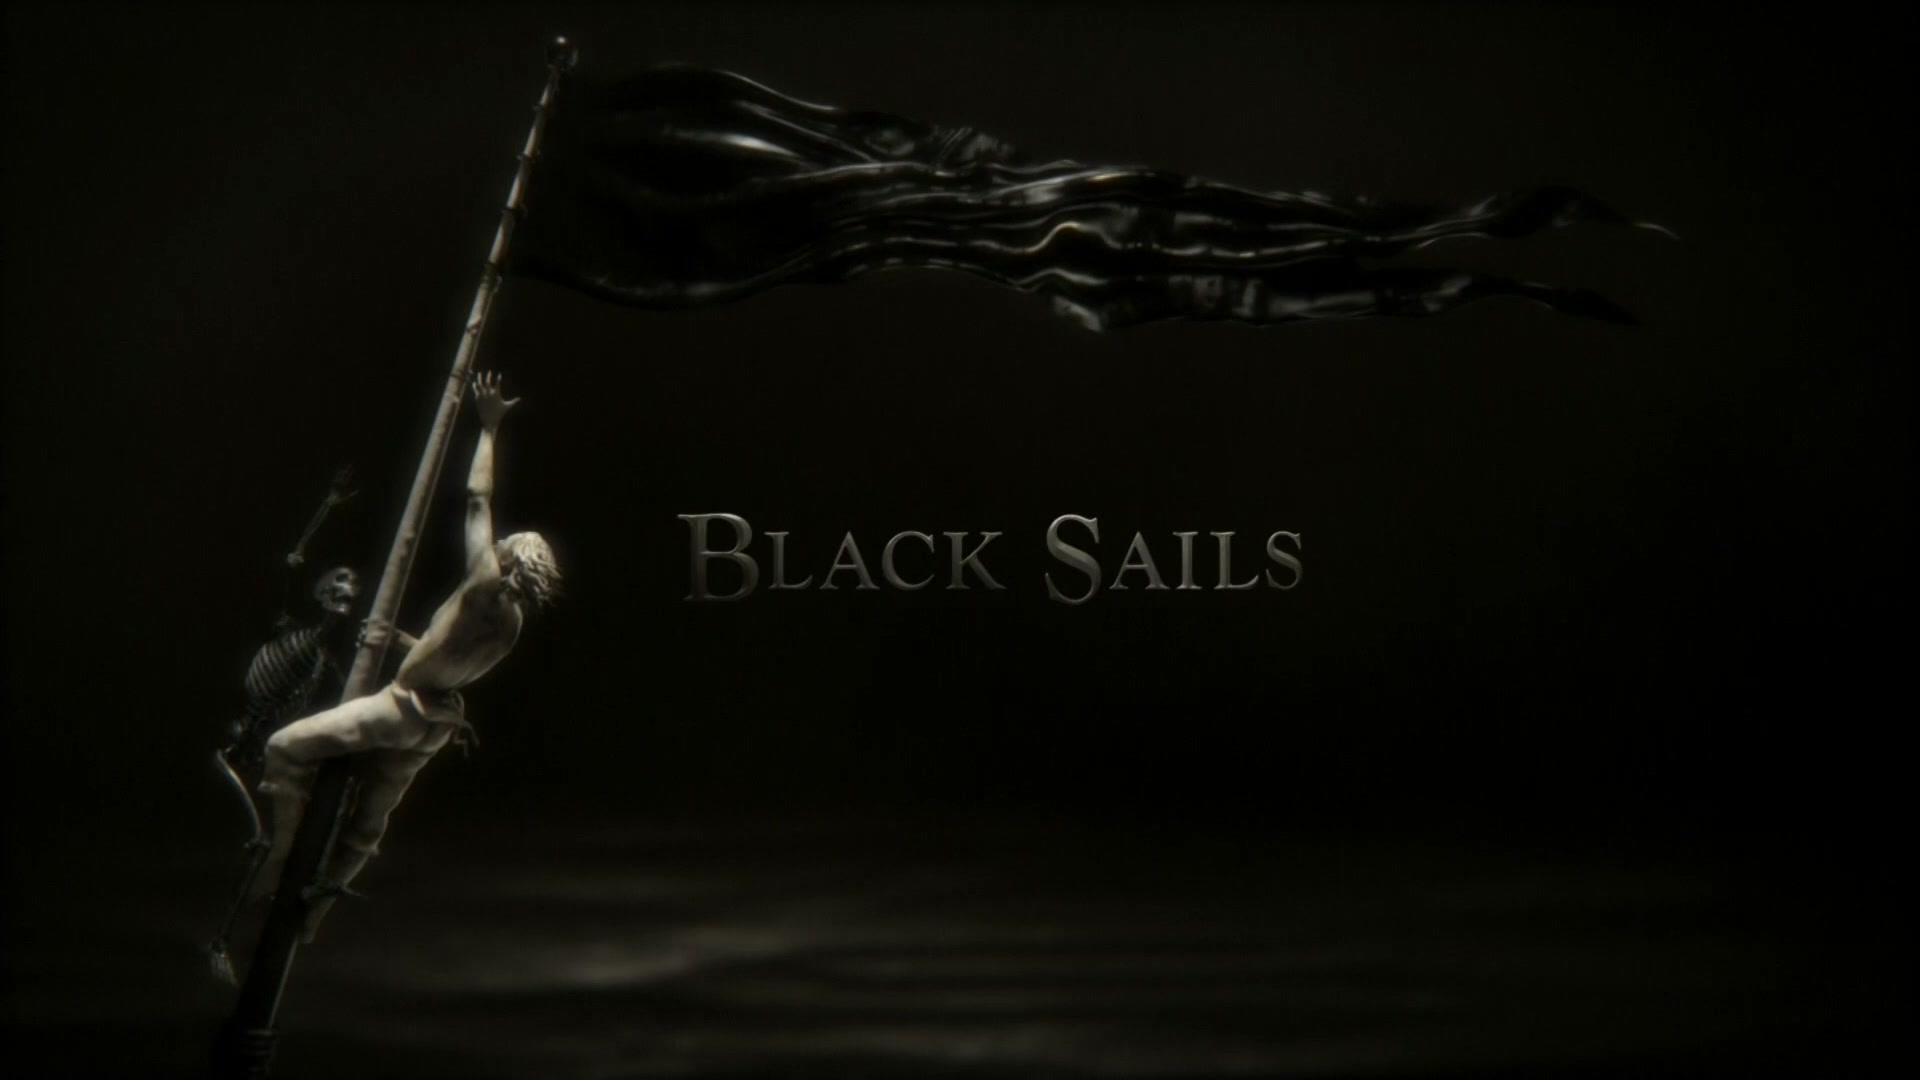 Rapidmoviez Ul Kf Black Sails S02e01 1080p HDtv X264 Batv 3gb